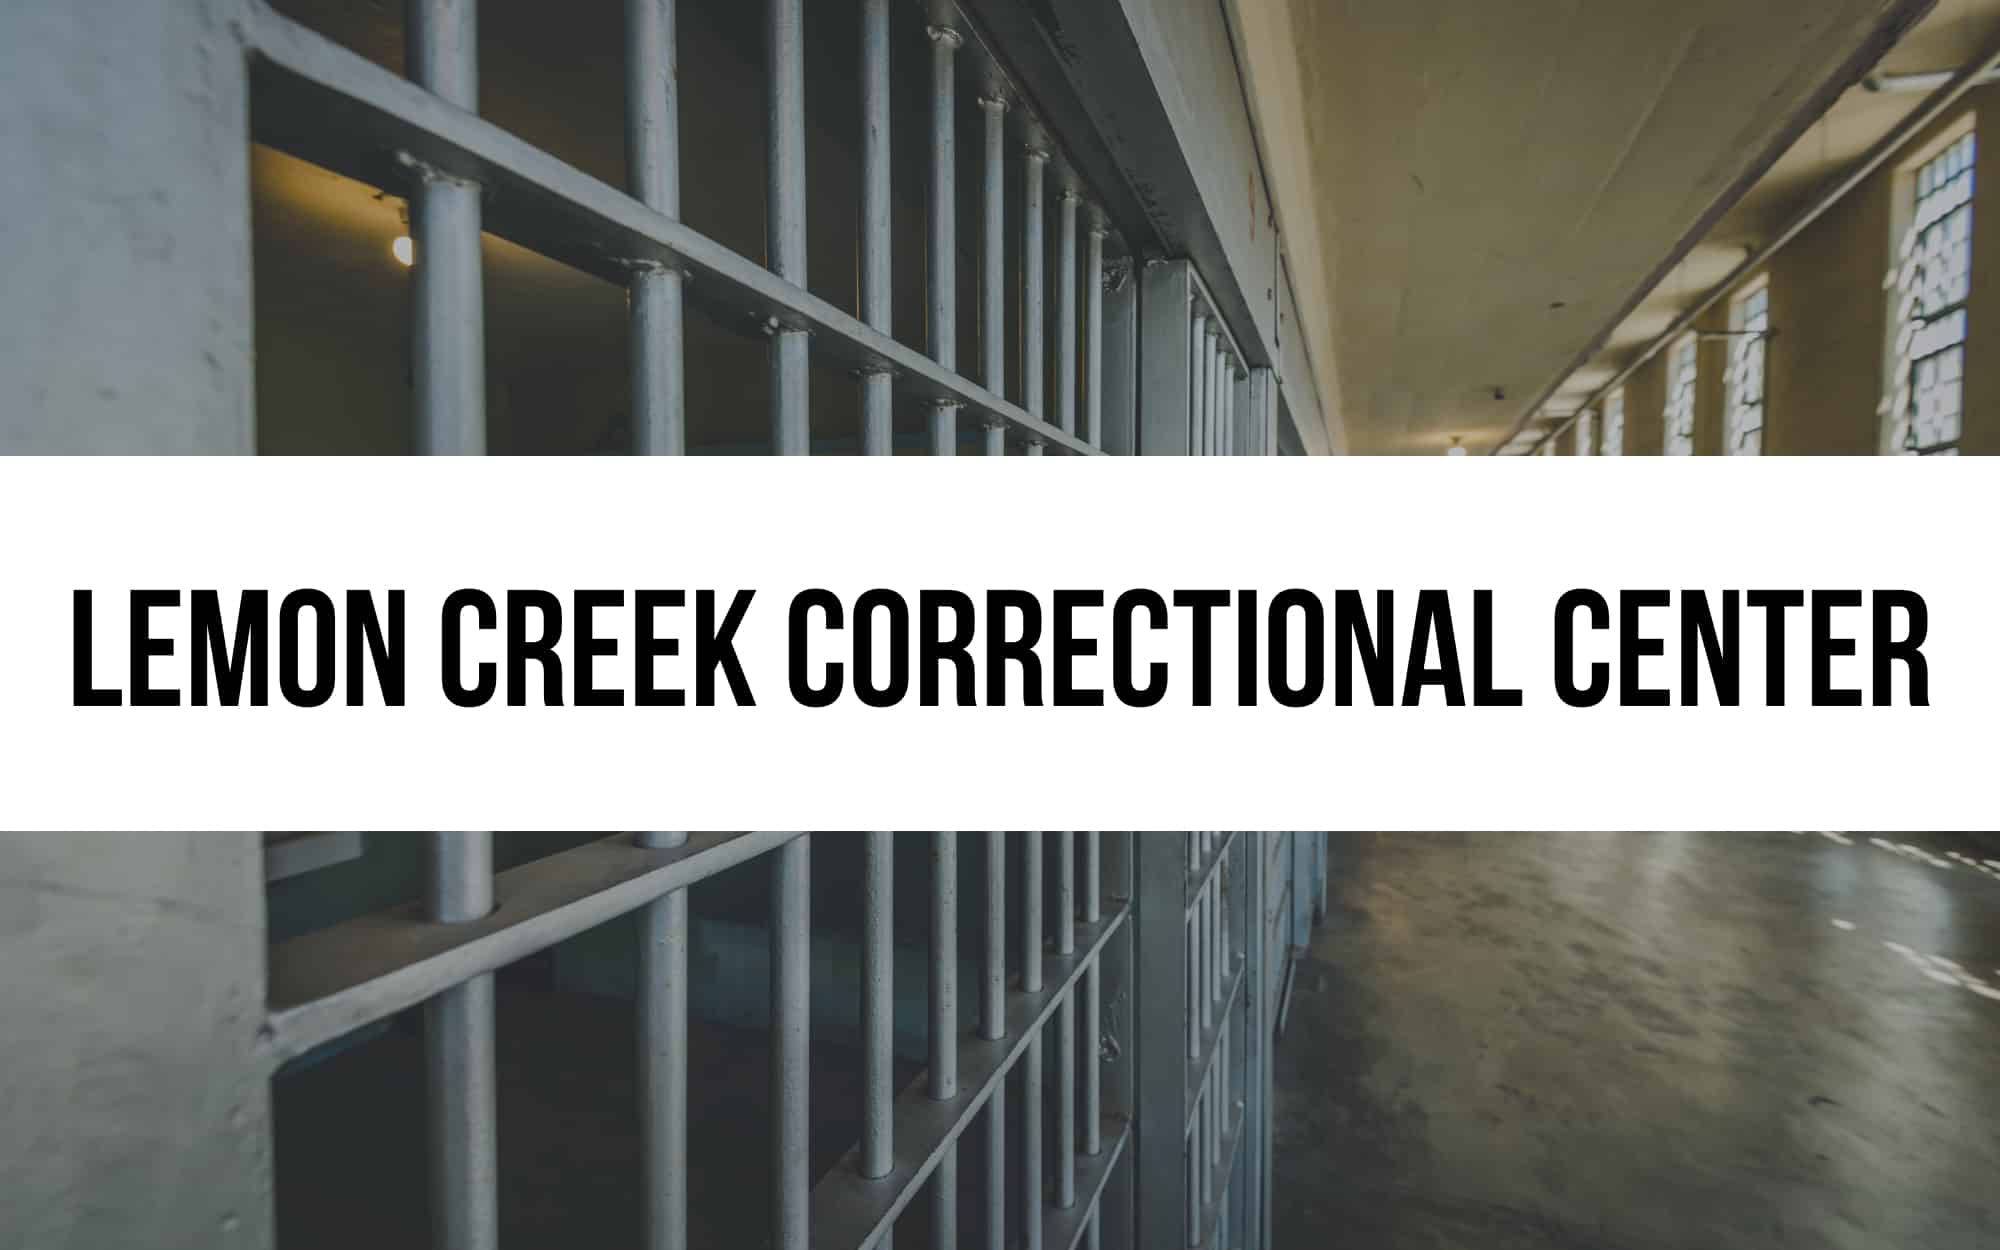 Lemon Creek Correctional Center